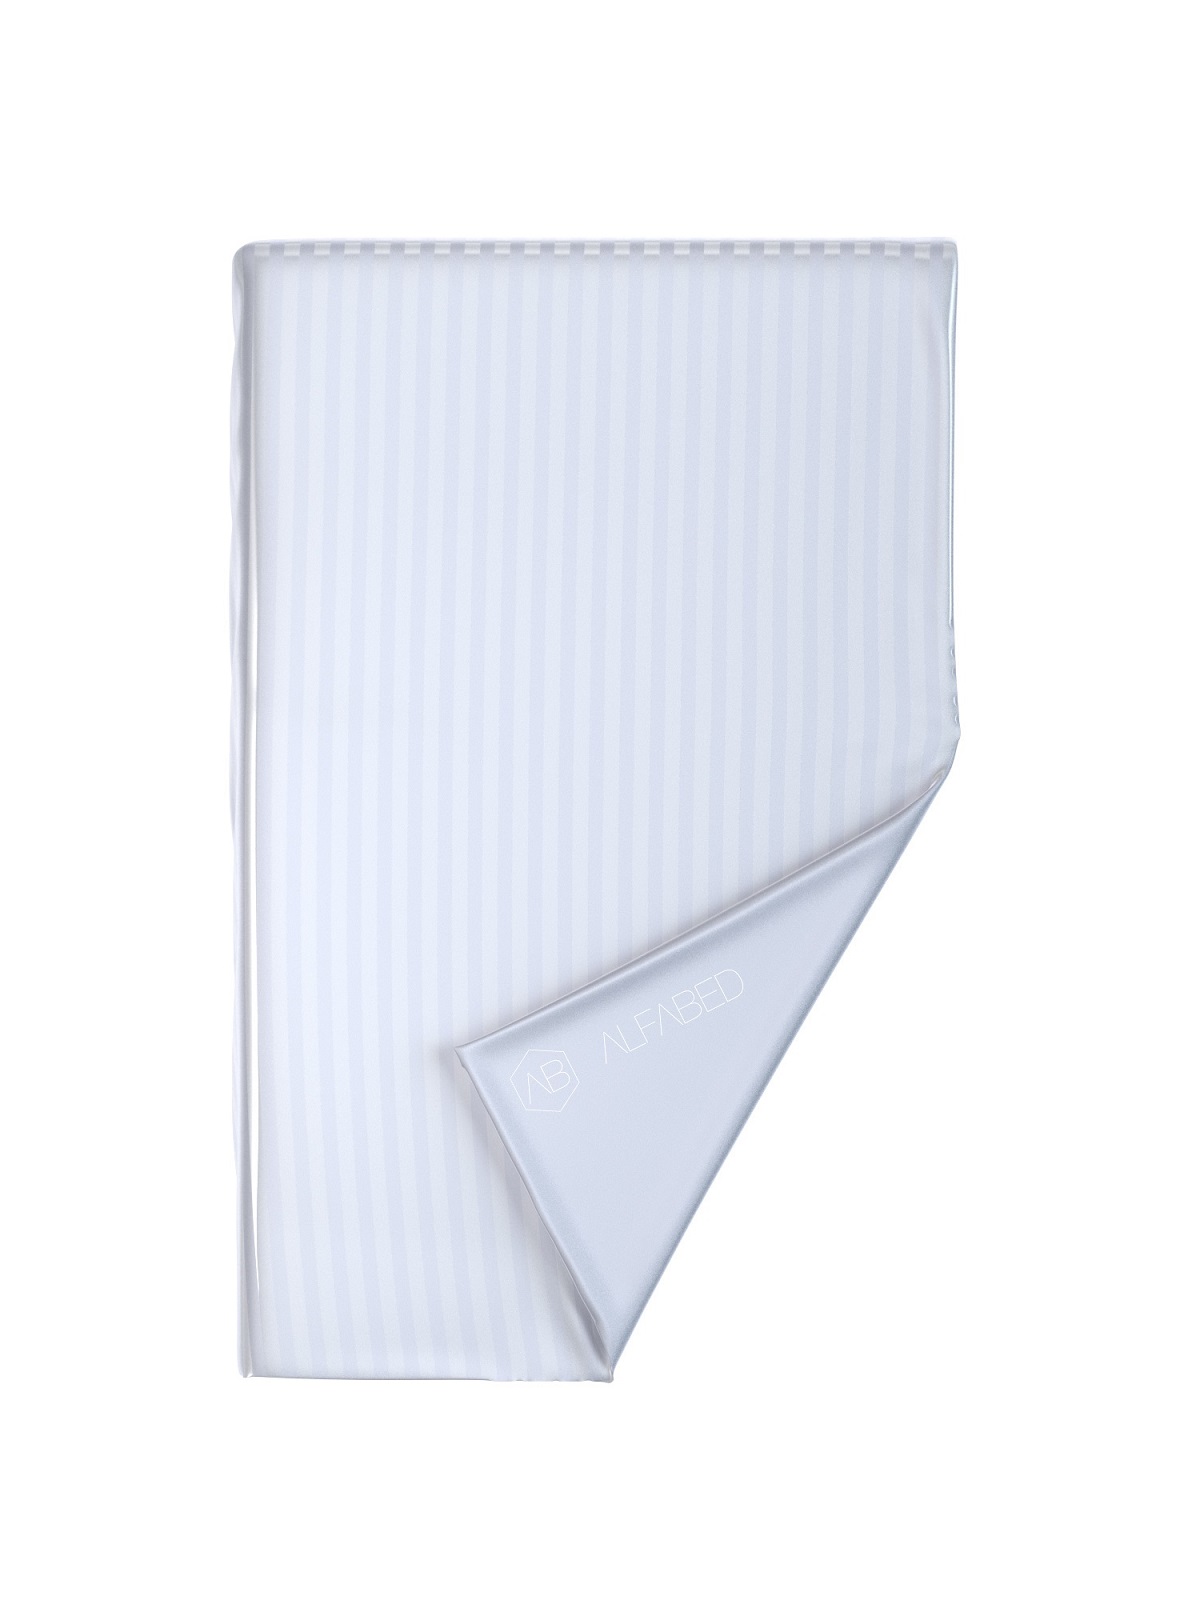 Topper Sheet-Case Premium Woven Cotton Sateen Stripe White V H-15